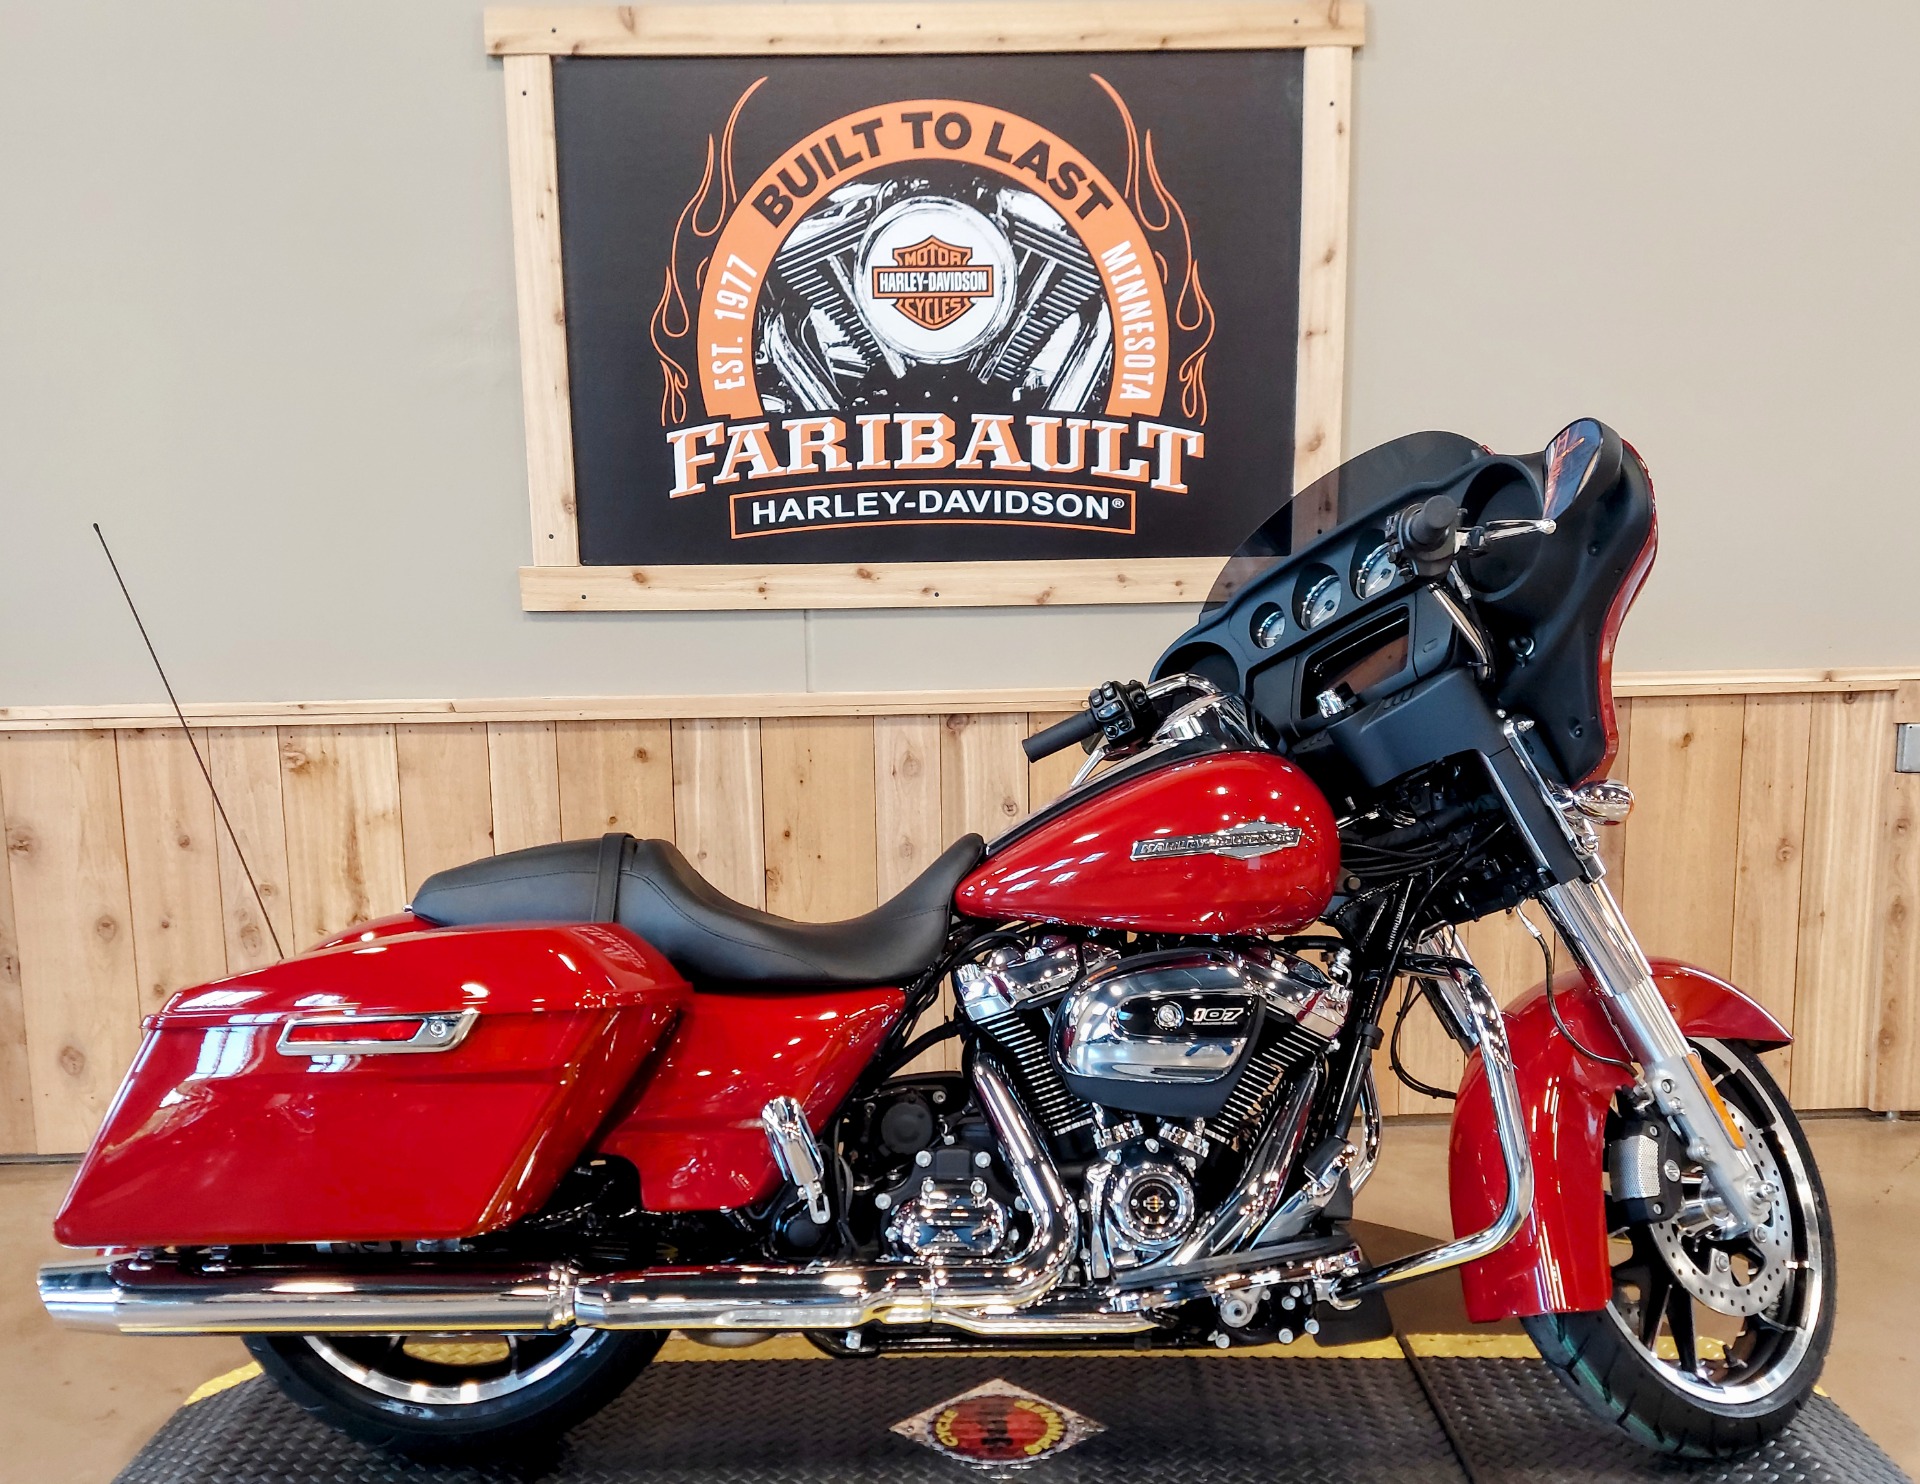 New 2021 Harley Davidson Street Glide Motorcycles In Faribault Mn To638758 Billiard Red